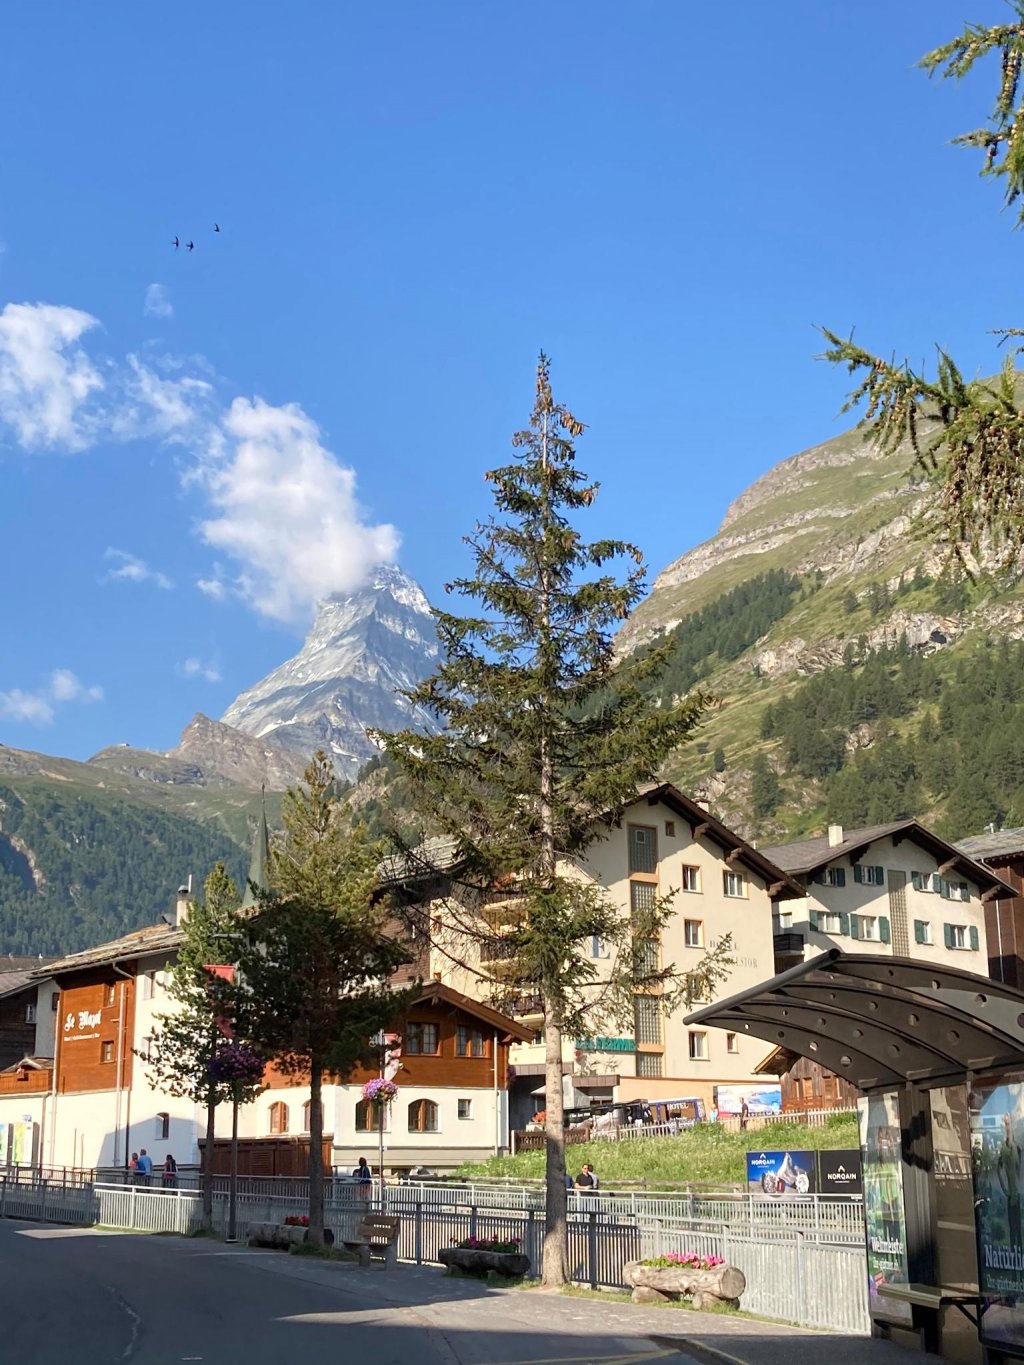 image-10636844-Zermatt_9-8f14e.w640.jpg